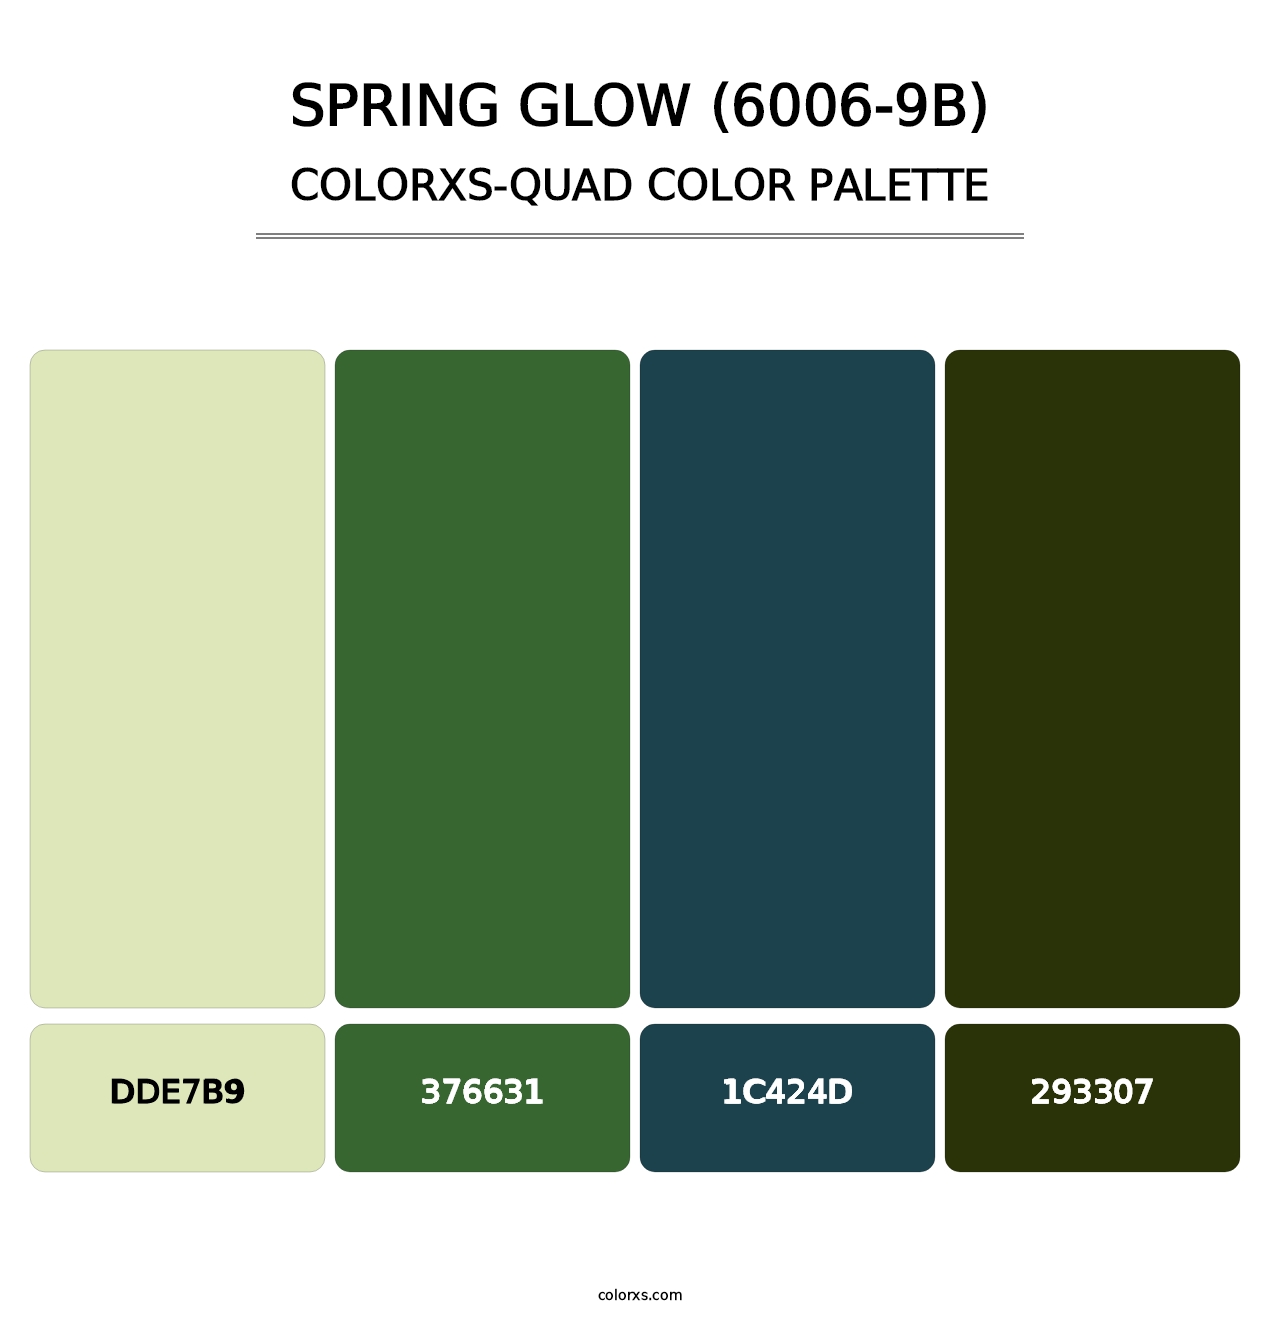 Spring Glow (6006-9B) - Colorxs Quad Palette